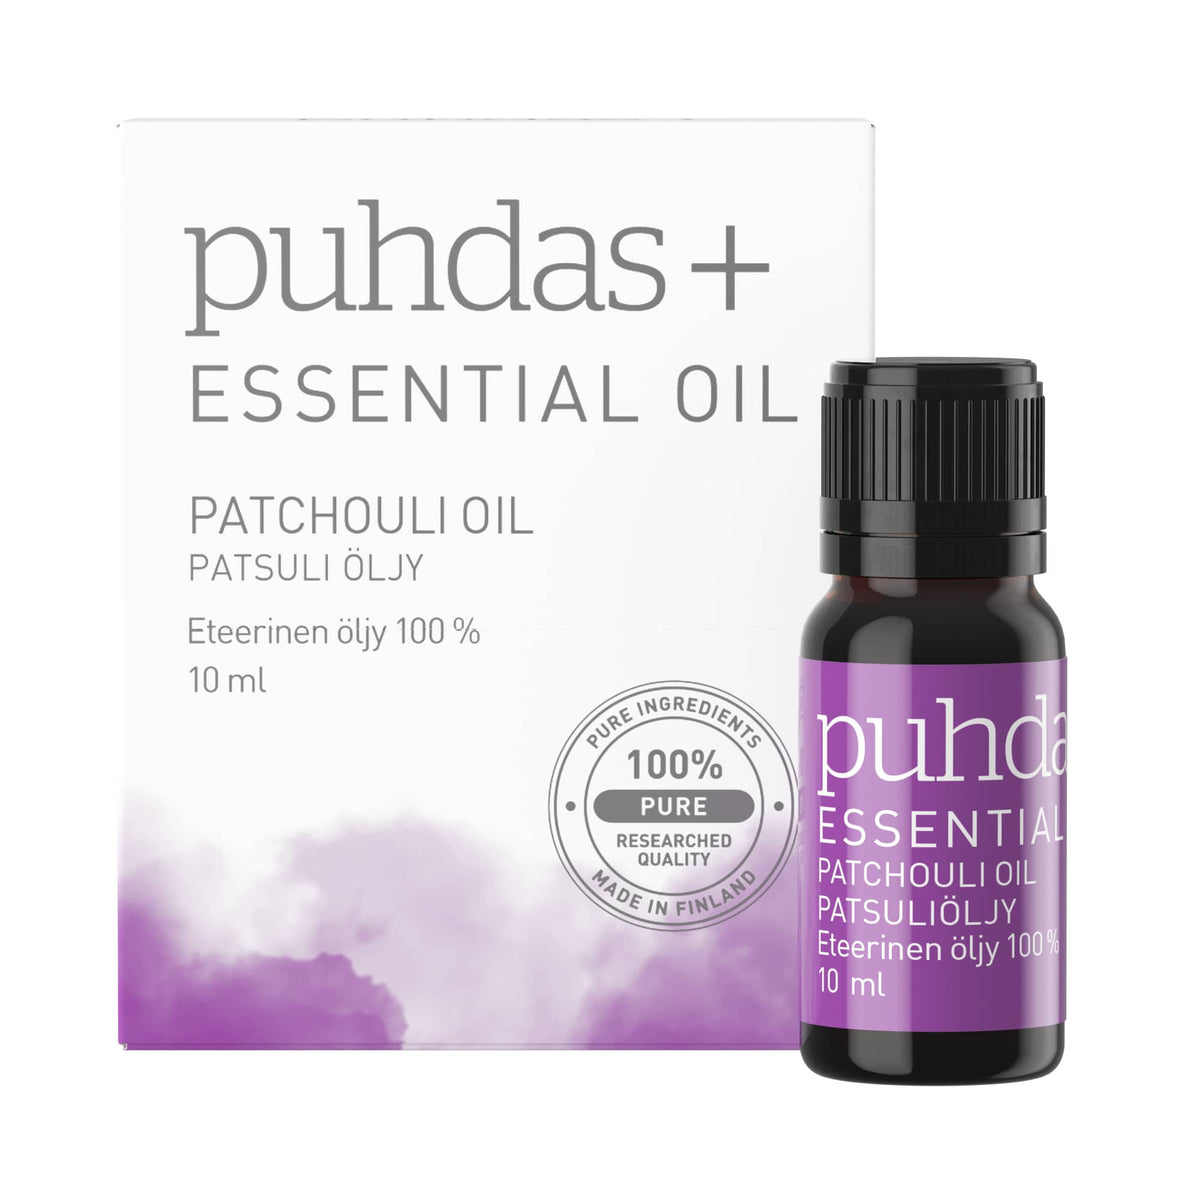 Puhdas+ Essential Oil Patchouli - Patsuliöljy eteerinen öljy 10 ml